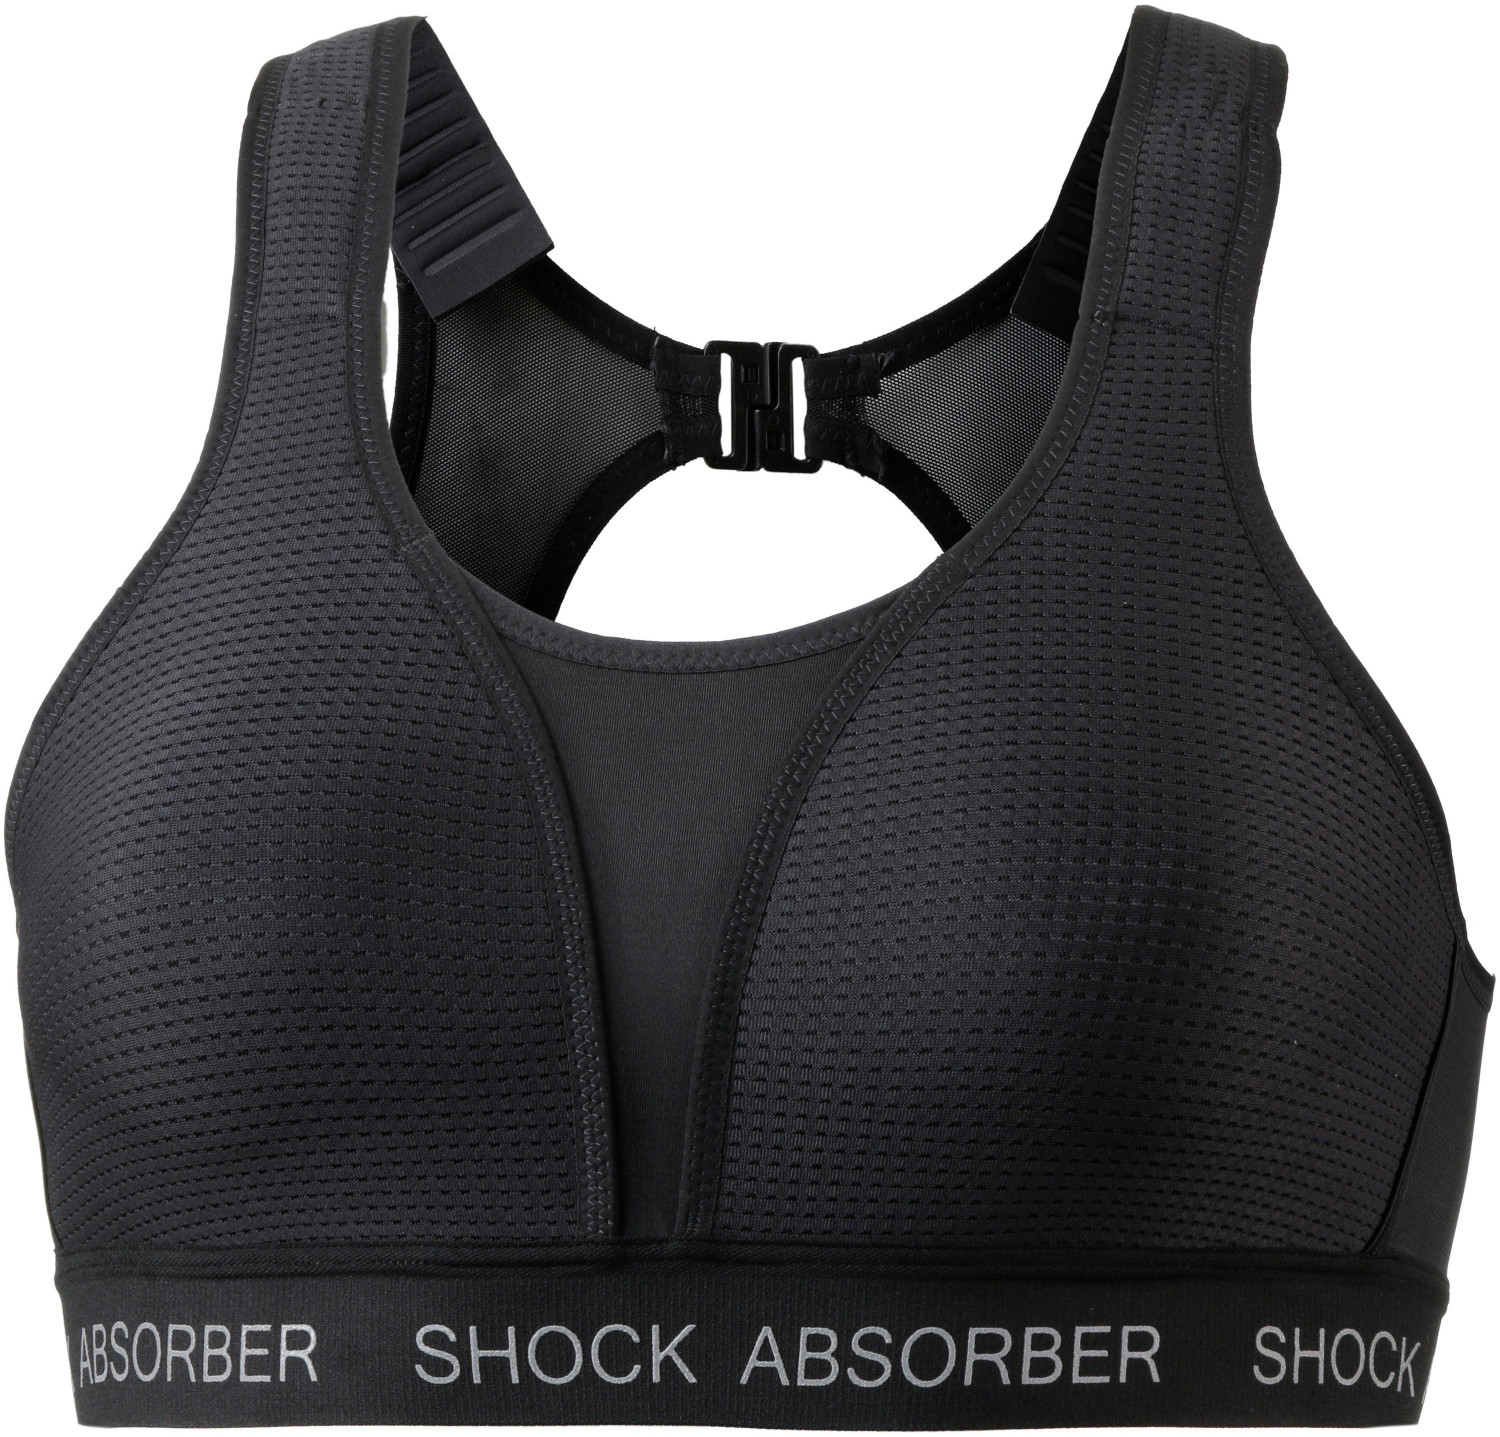 Shock Absorber Ultimate Run Bra Padded 06s7 - Sports bras